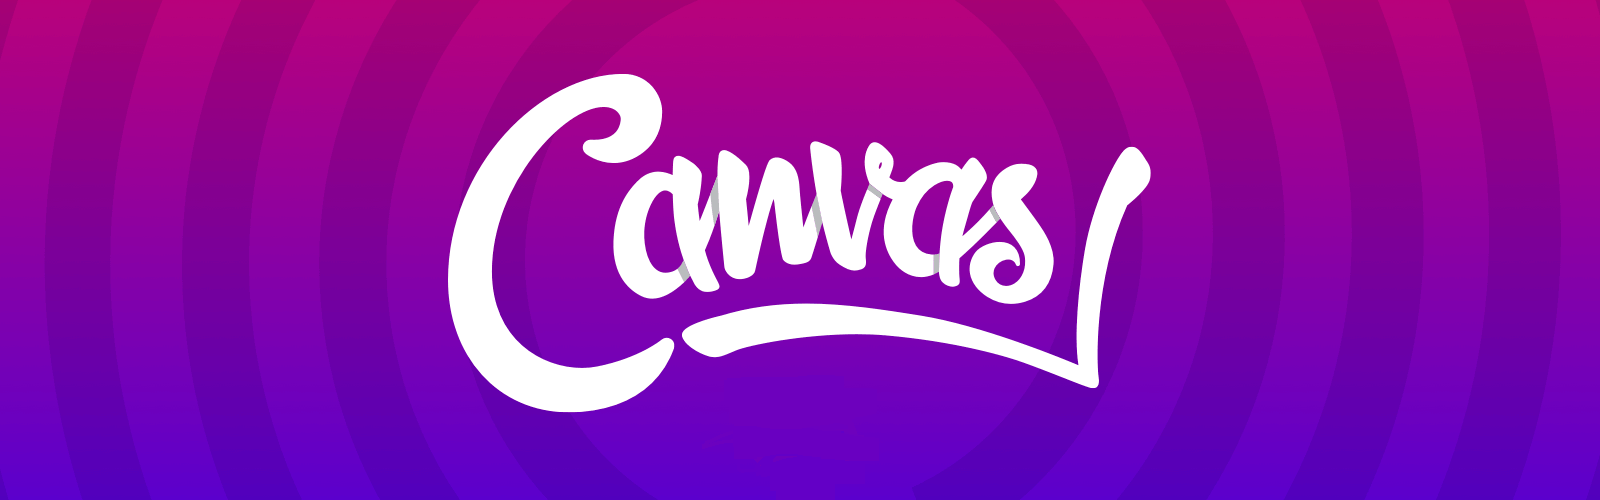 Canvas Conference Logo